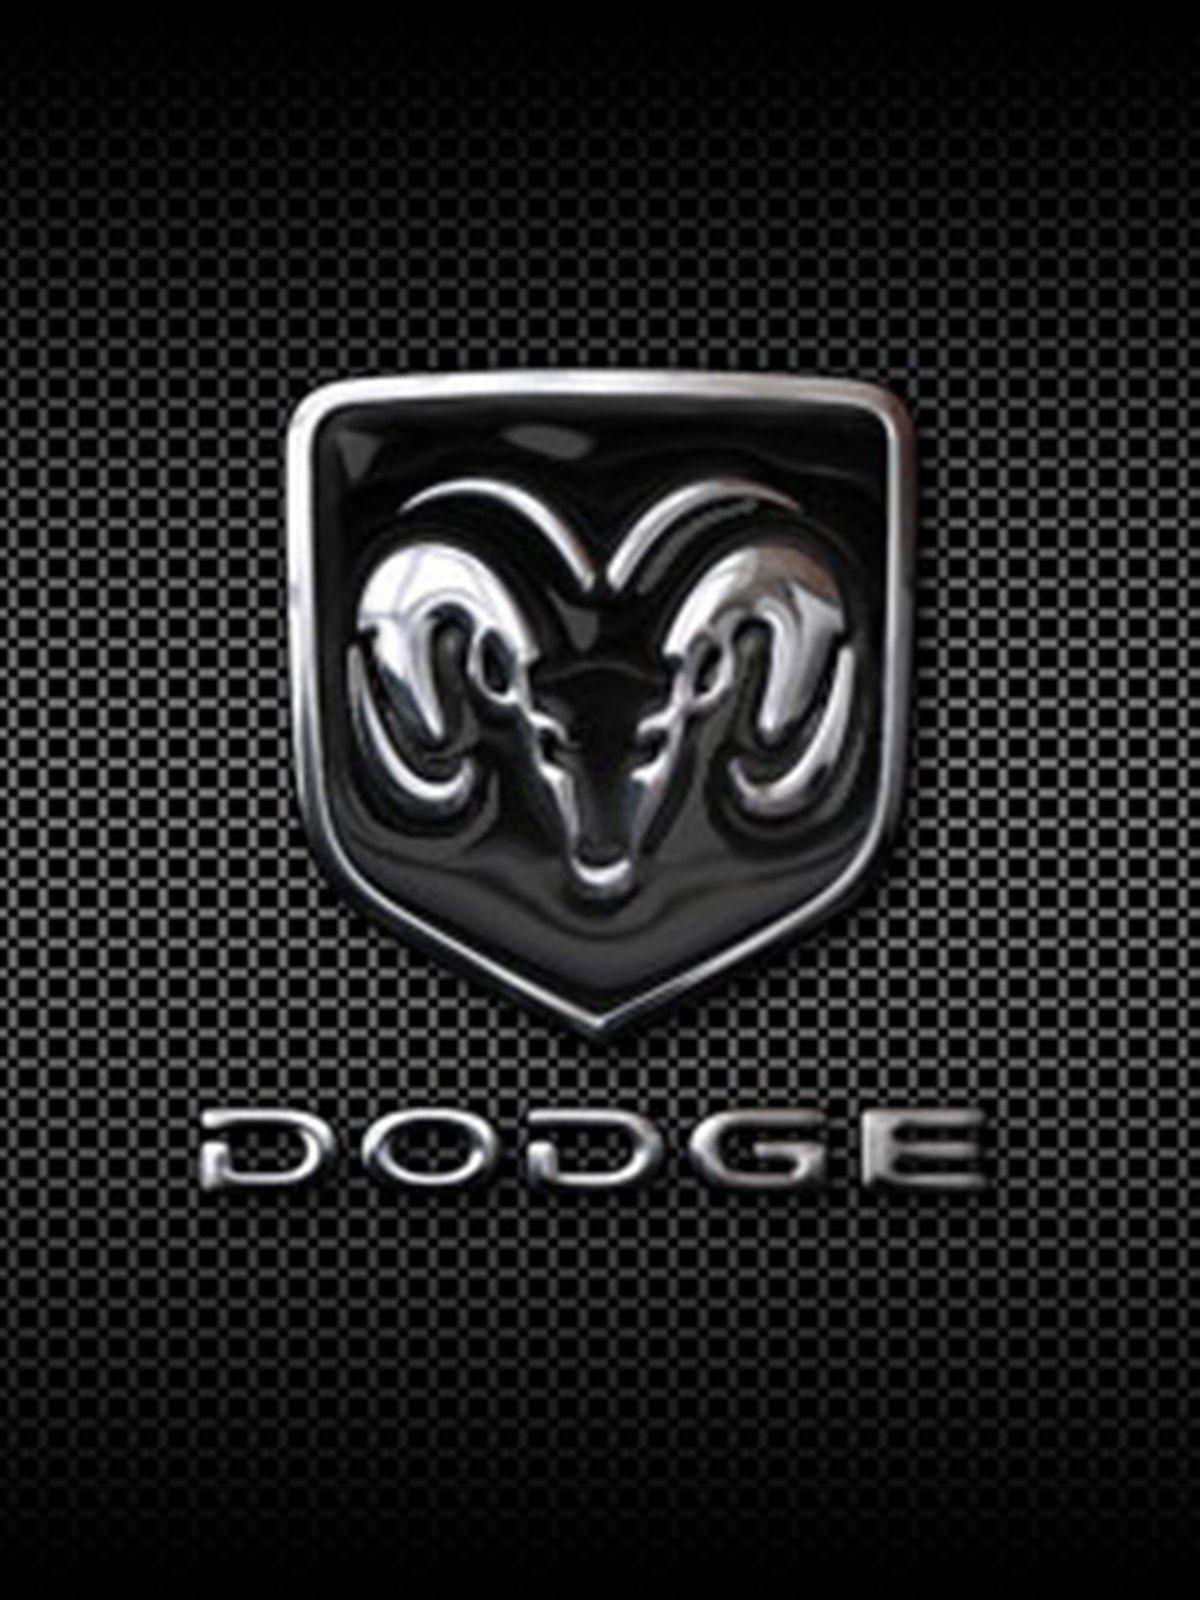 Dodge Logo Phone Wallpapers